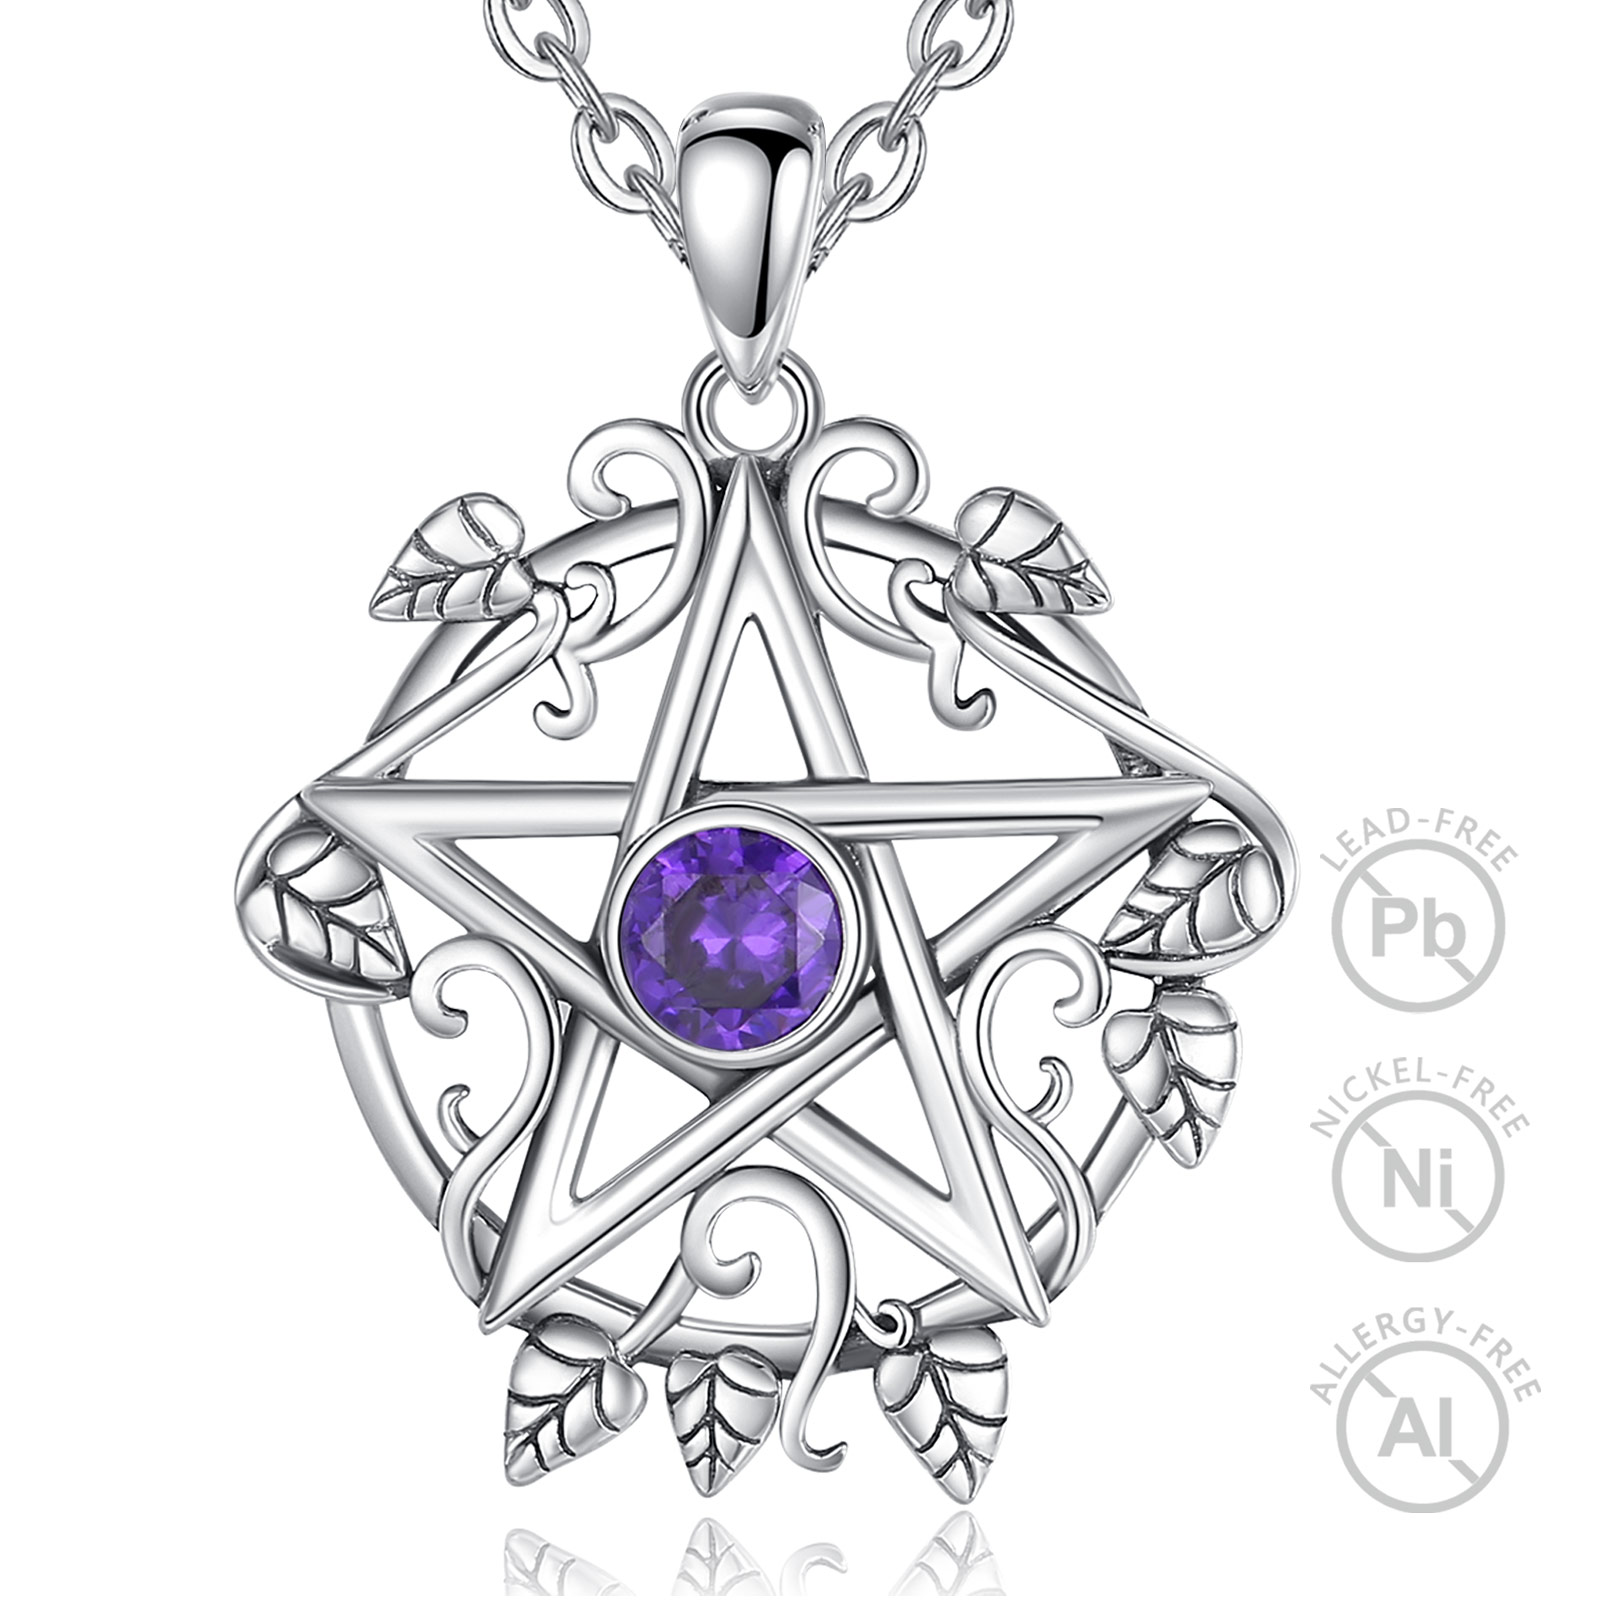 Merryshine Jewelry 925 Sterling Silver Purple Cubic Zirconia Wiccan Pentagram Statement Pendant Necklace for Women or Men